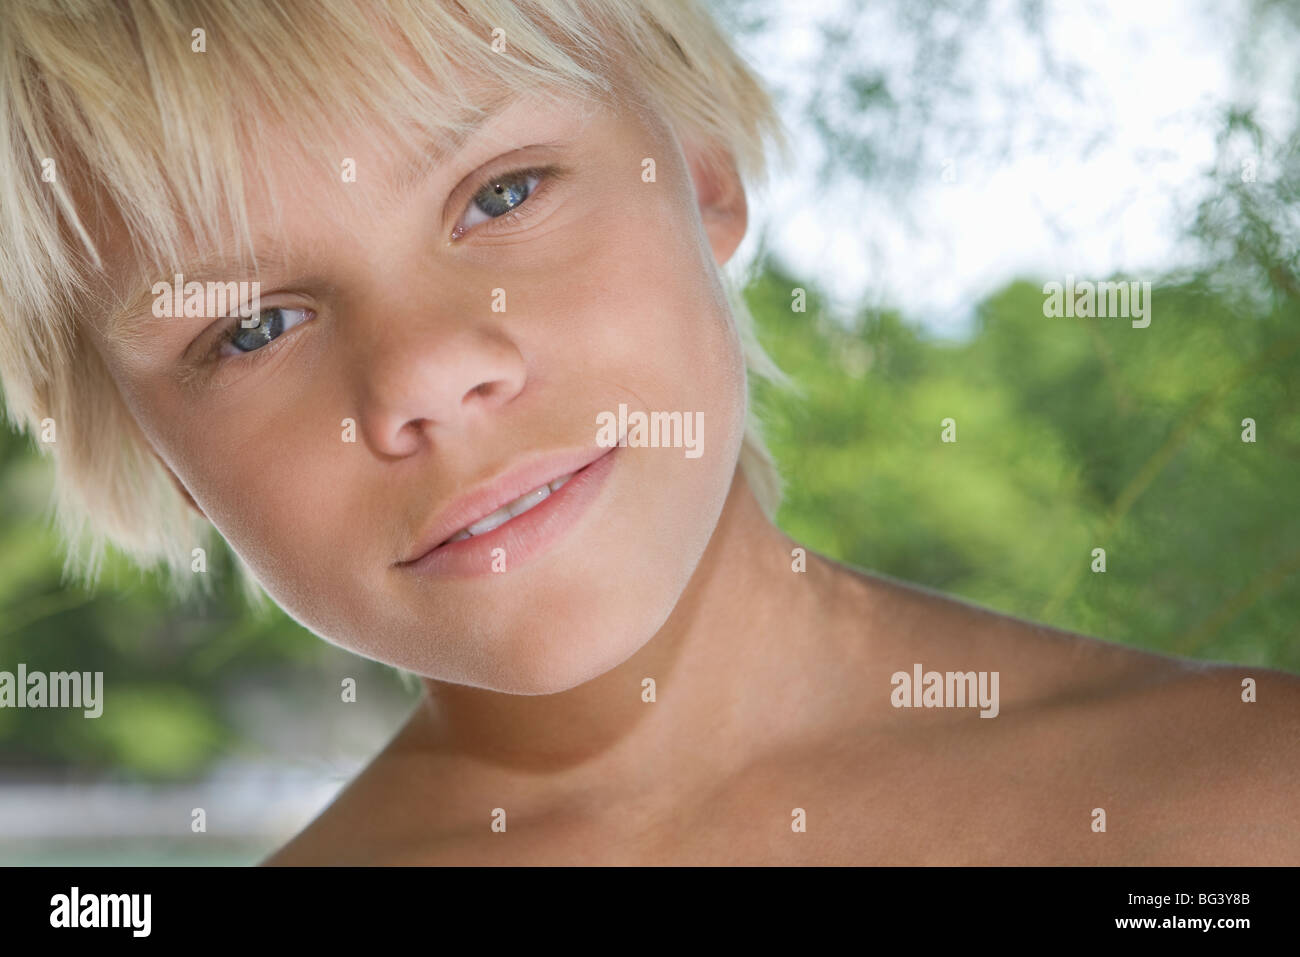 Blonde boy aged 12-13 years Stock Photo